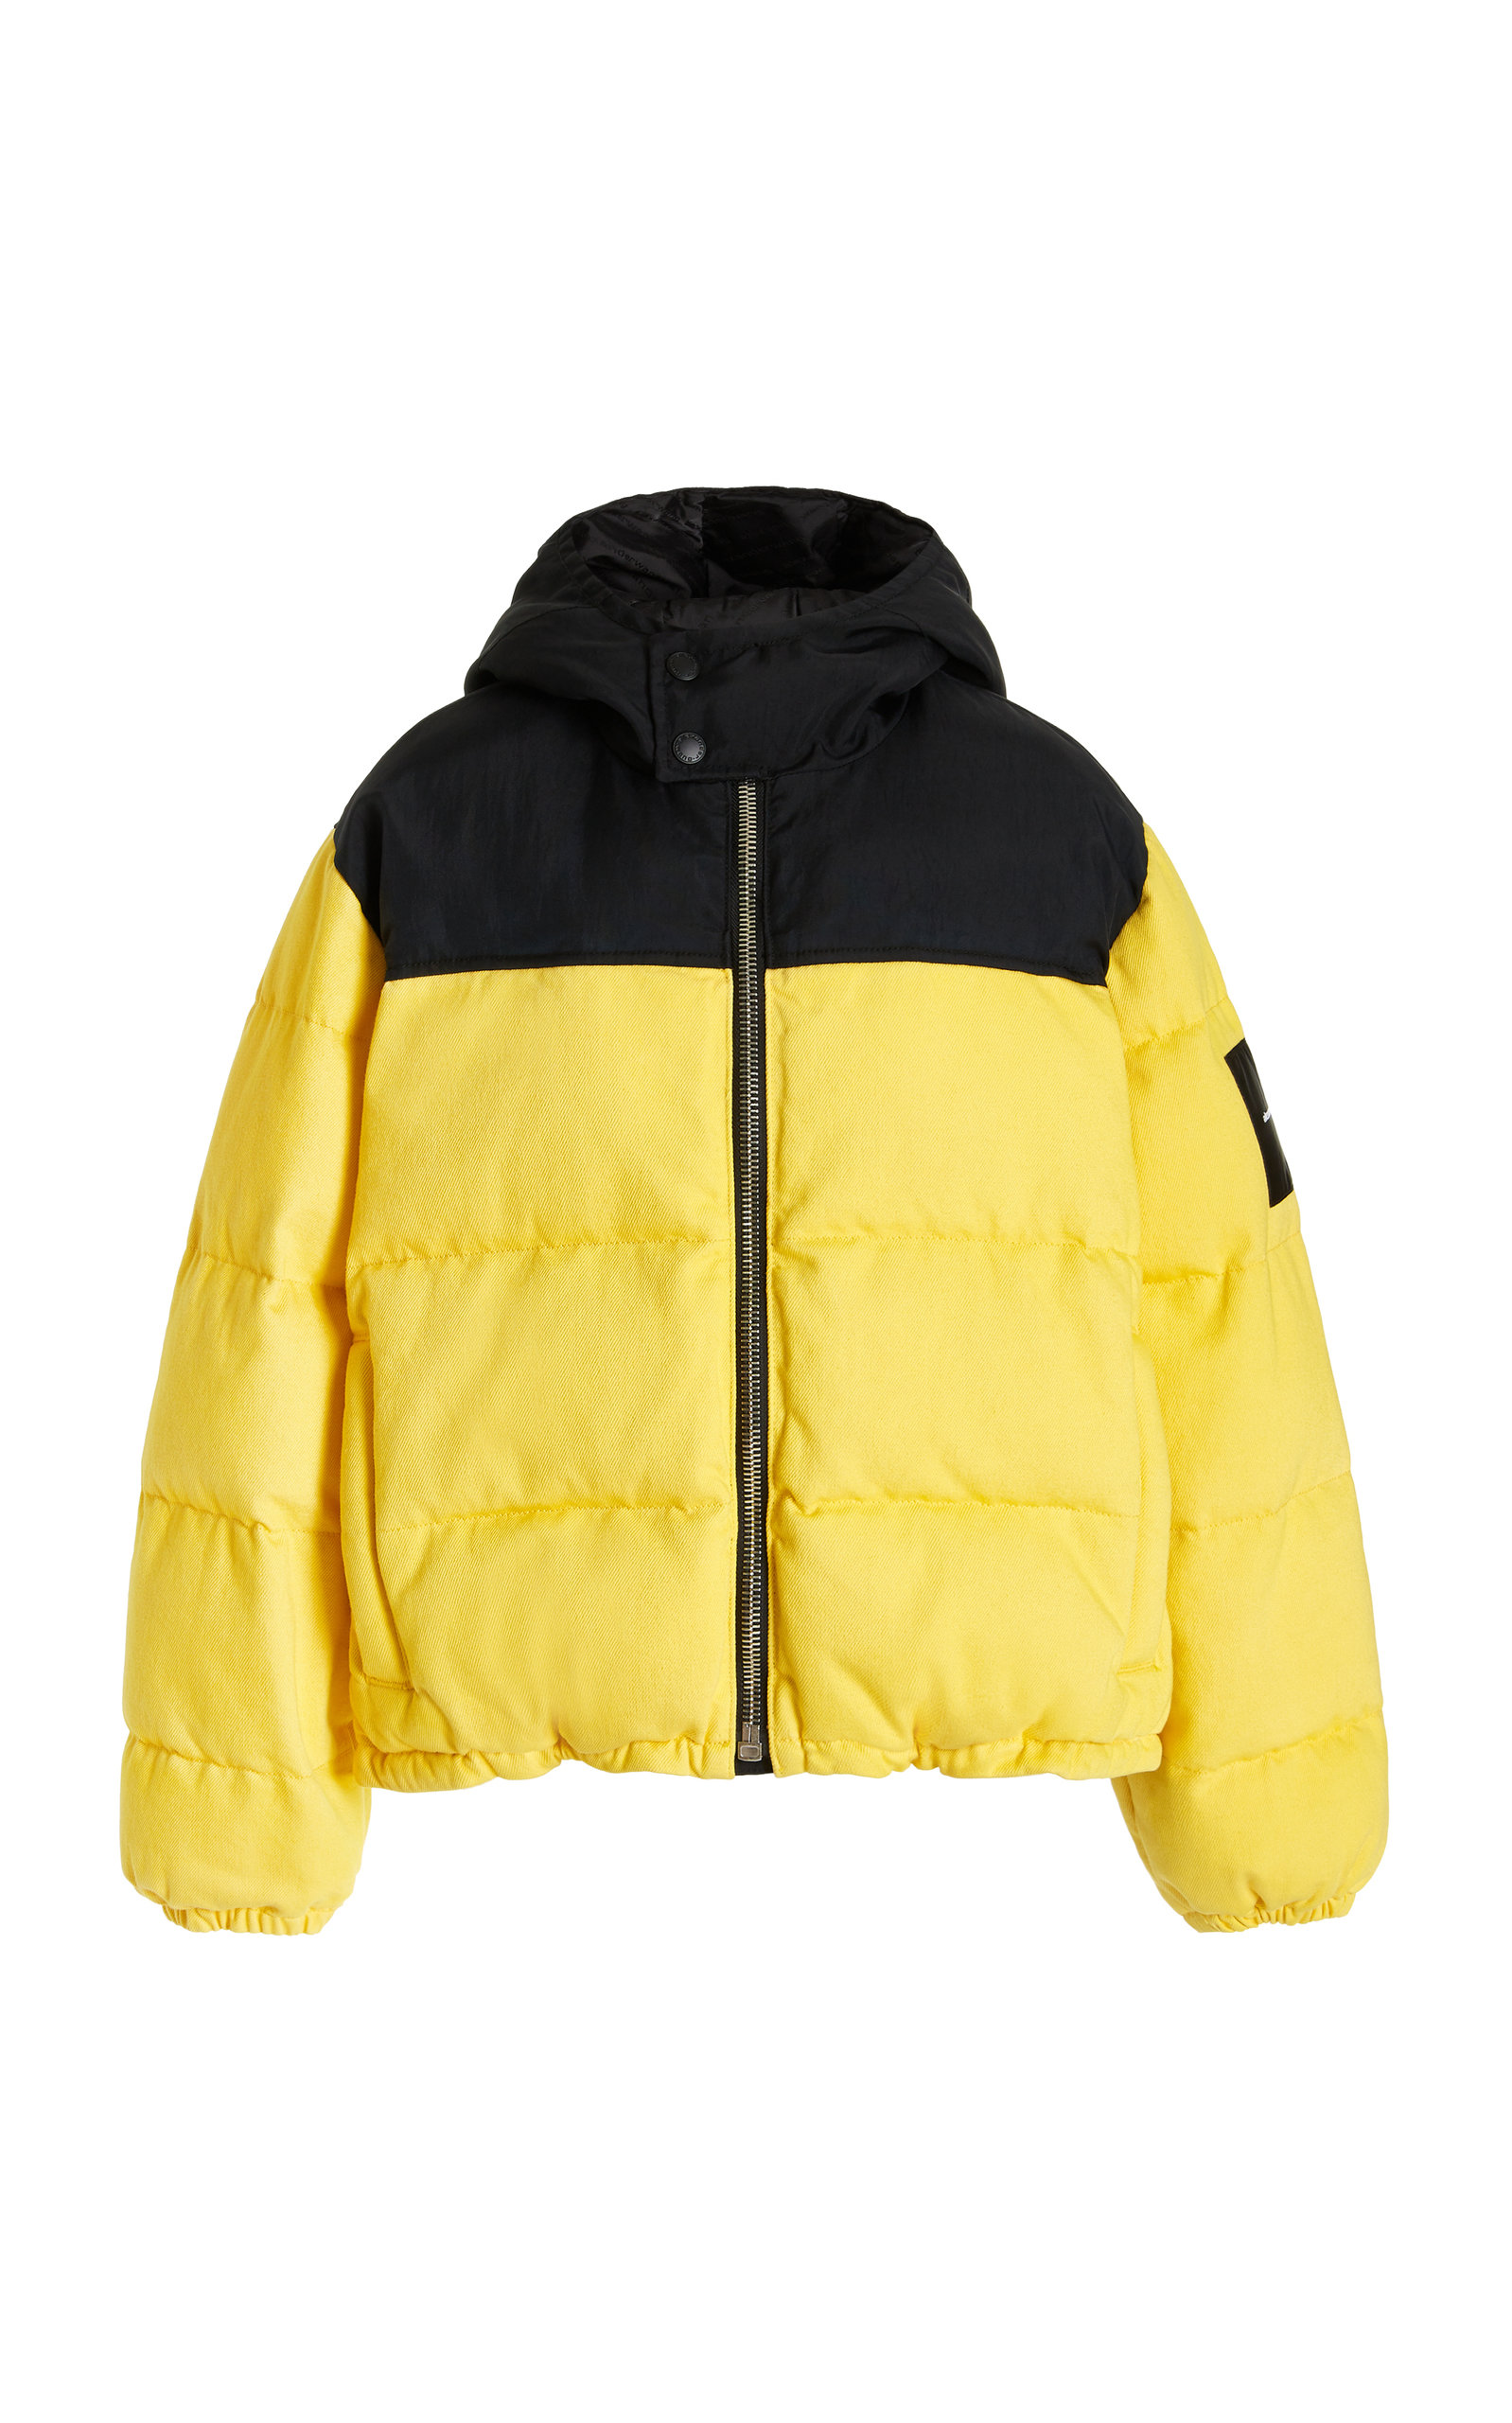 Alexander Wang - Women's Hooded Puffer Jacket - Yellow - Moda Operandi